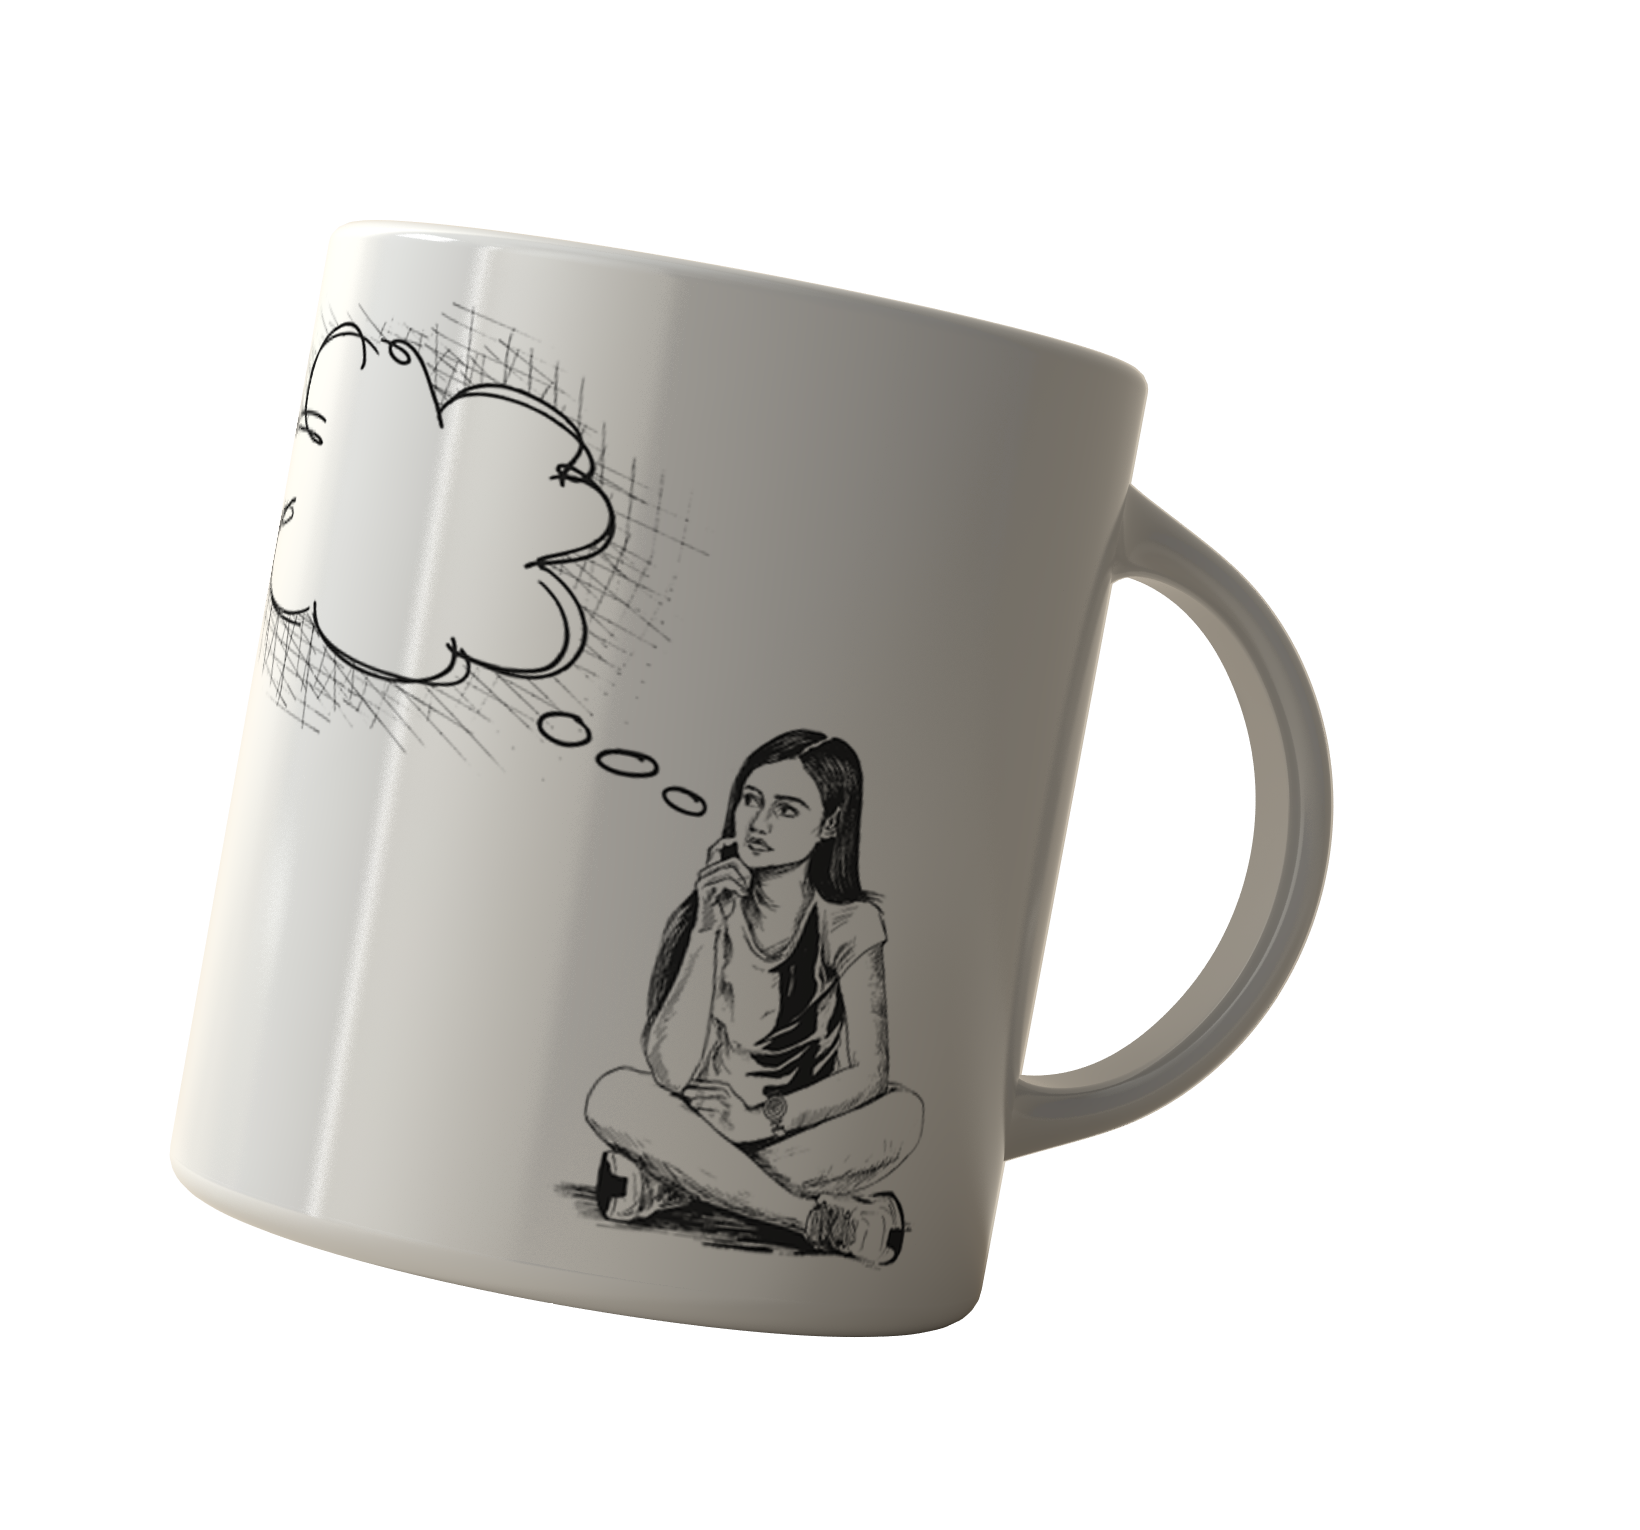 Customized Coffee Mugs, Birthday Mugs & Ceramic Mugs with Photo and Caption